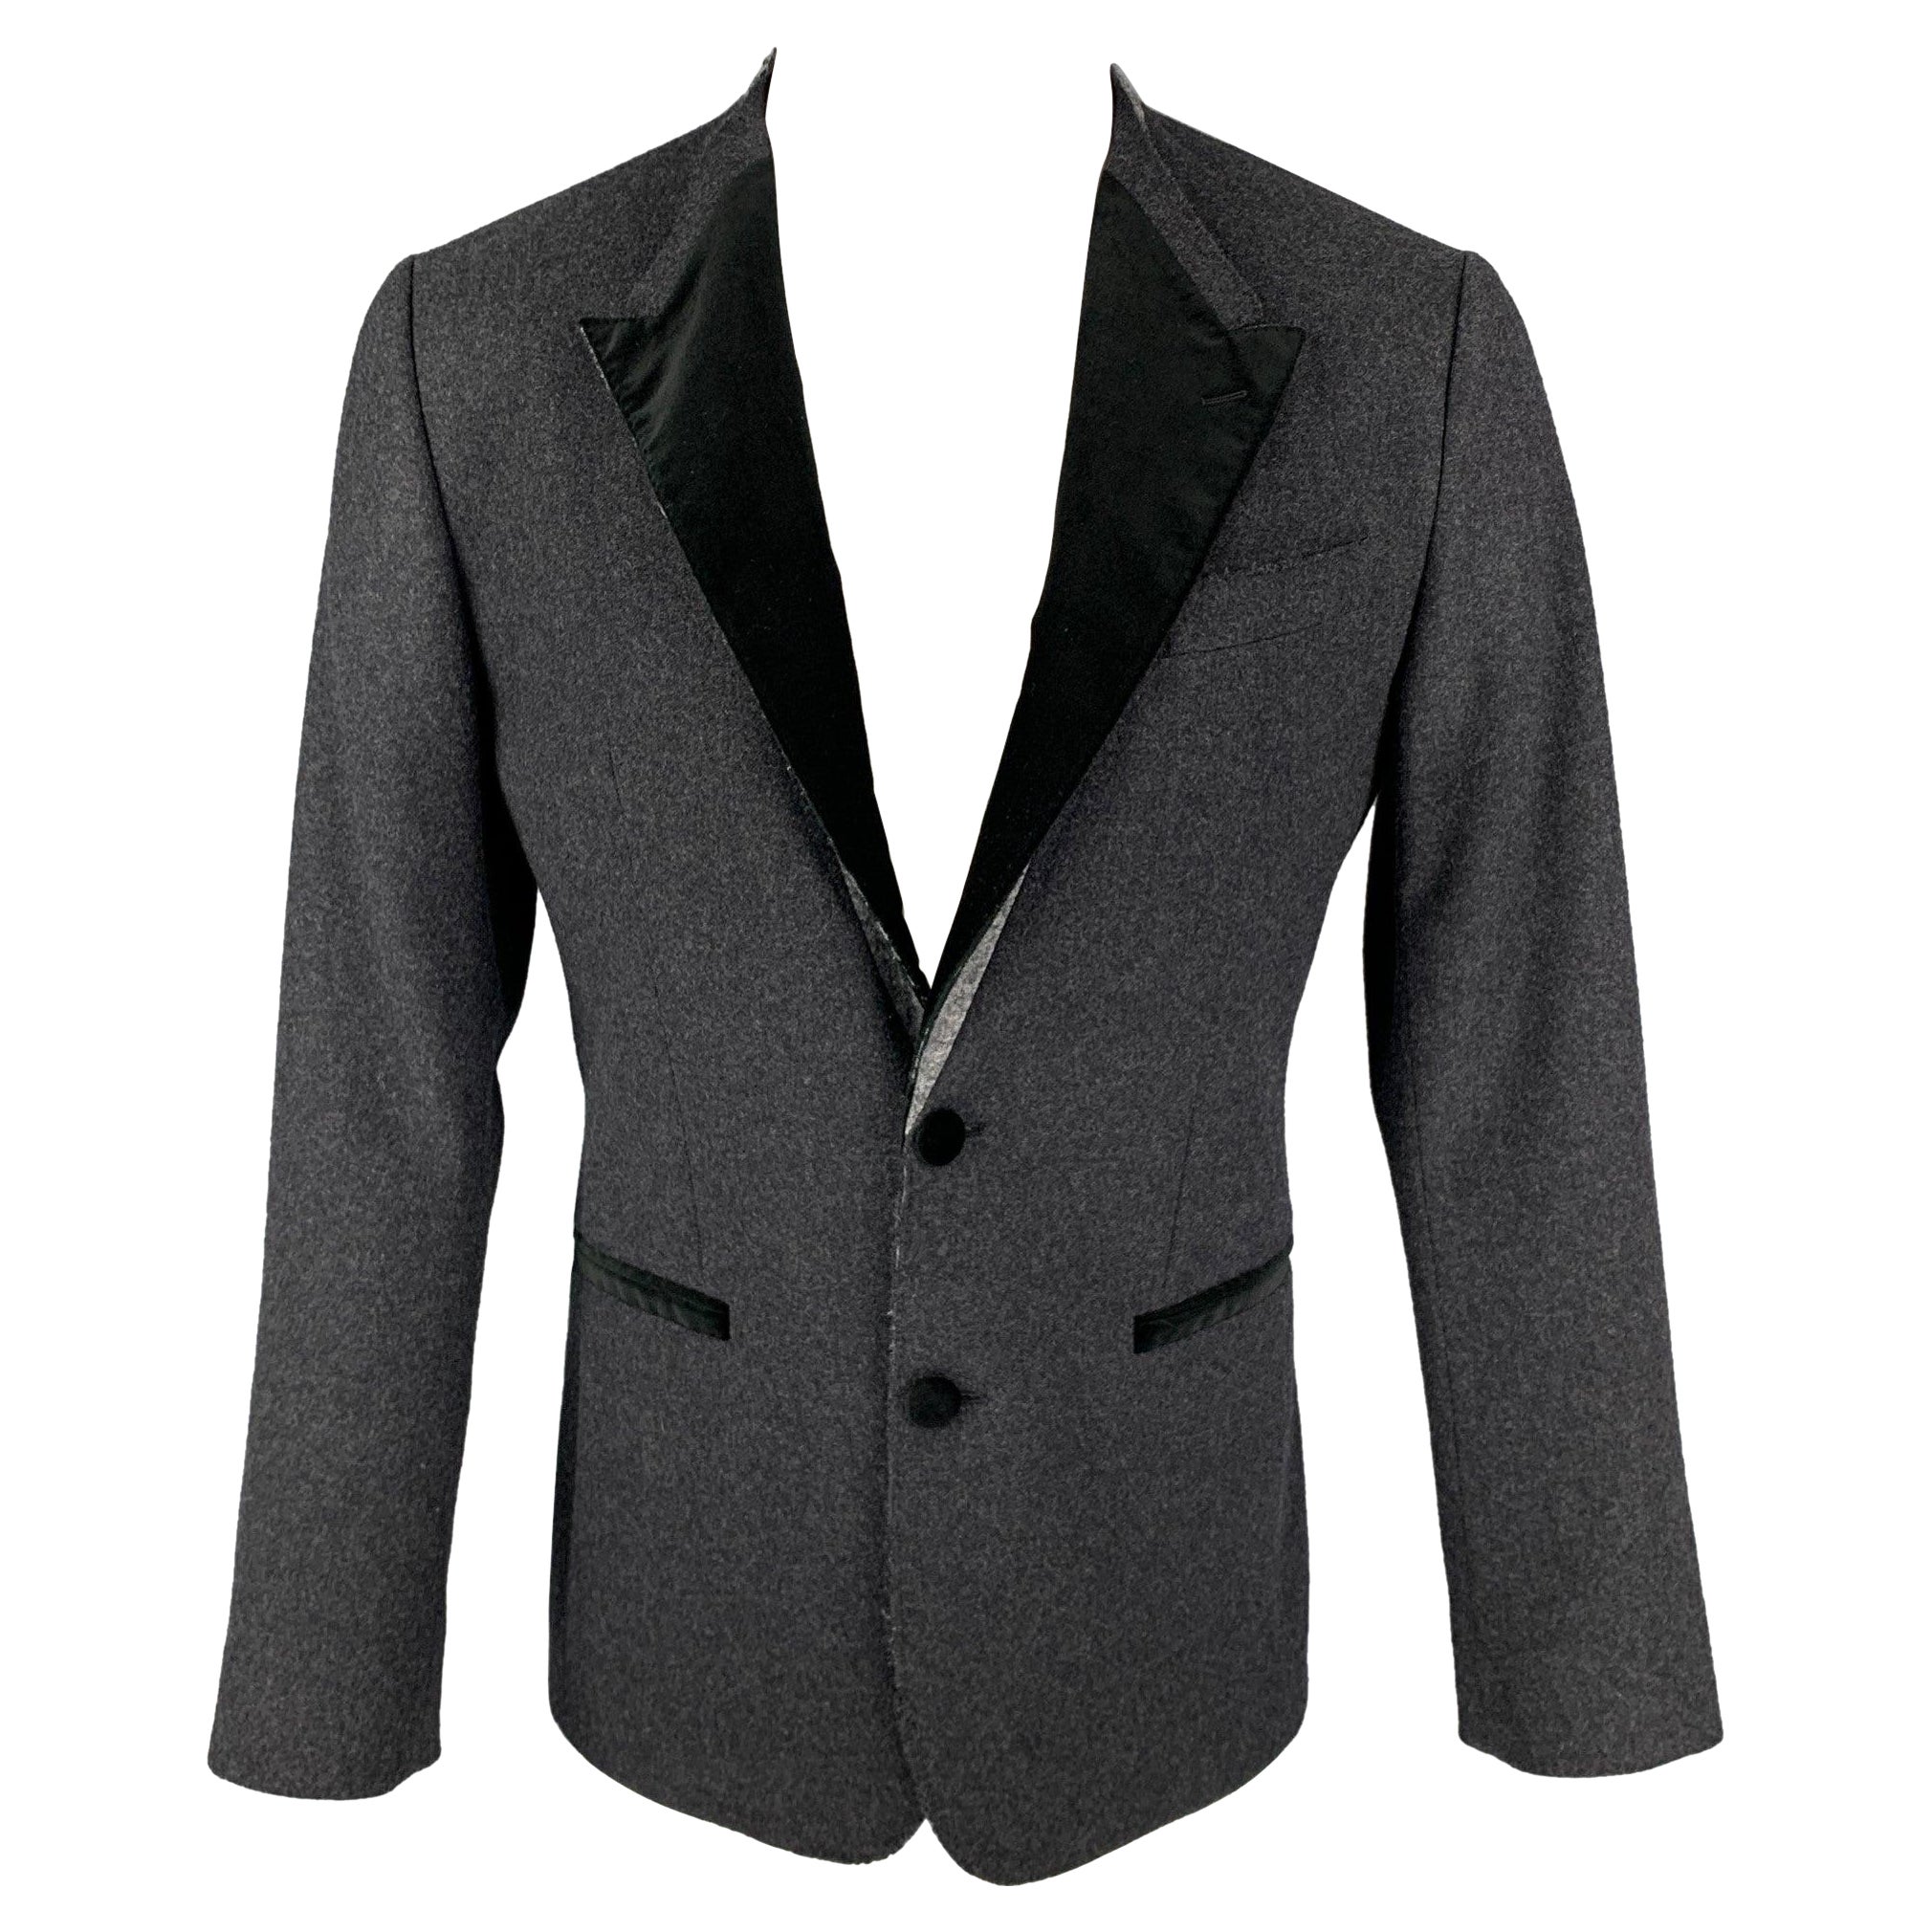 DOLCE & GABBANA Size 36 Charcoal & Black Wool Blend Sport Coat For Sale